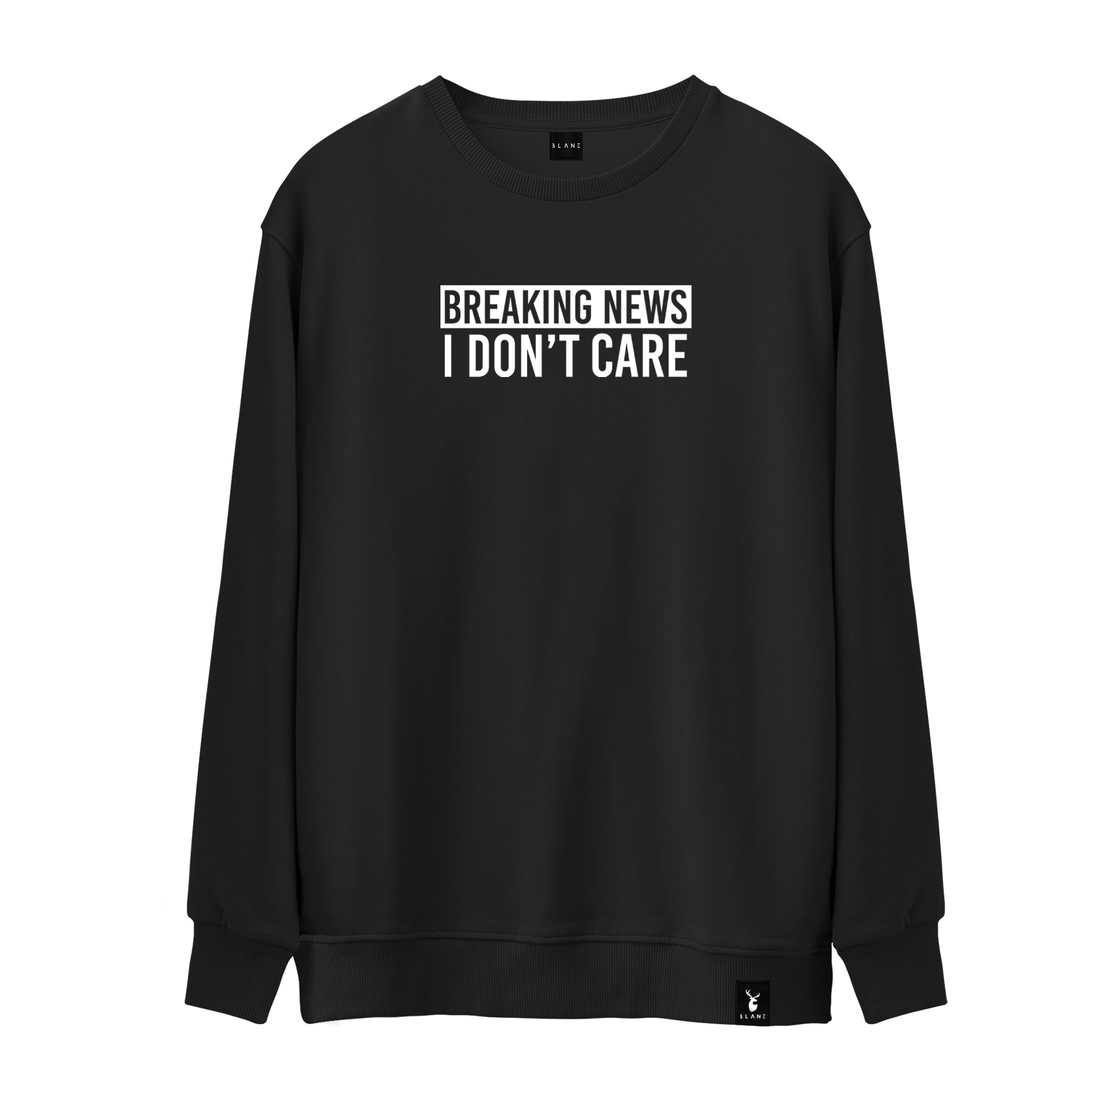 I DON'T CARE - Sweatshirt